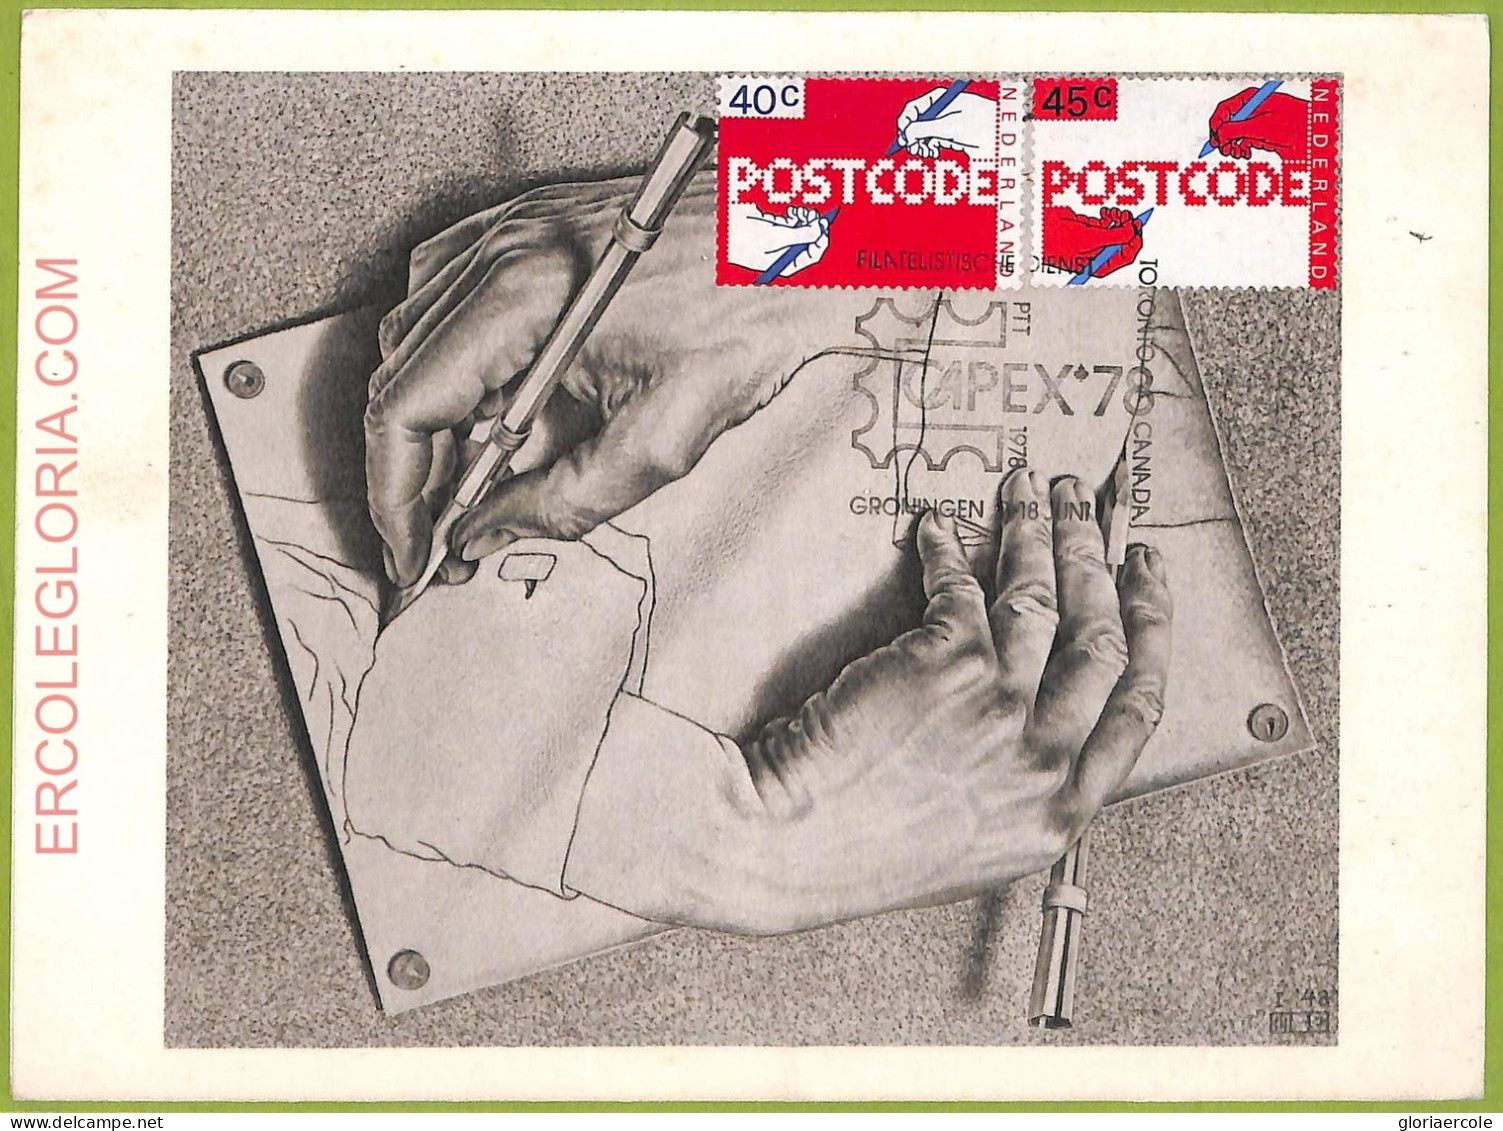 Ad3252 - Netherlands - Postal History - MAXIMUM CARD -  1978  Groningen - Maximumkarten (MC)